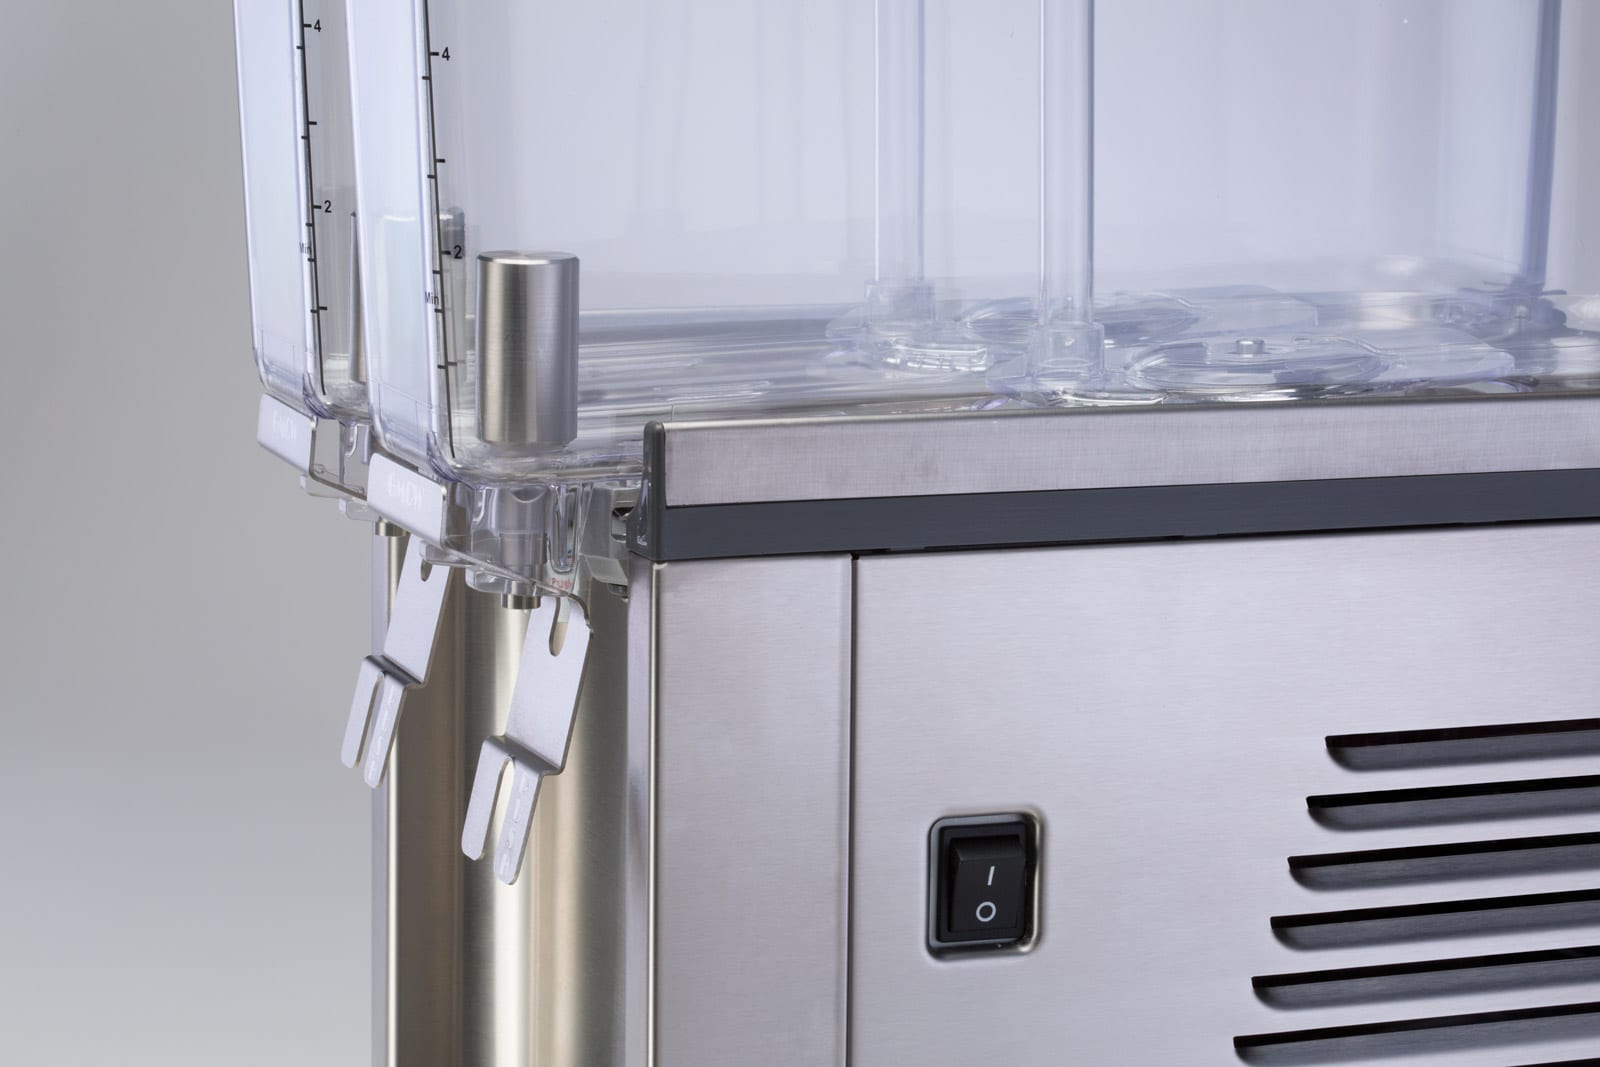 Crathco CS-2D-16 Simplicity Bubbler Series Premix Cold Beverage Dispenser  (2) 4.75 gallon bowls